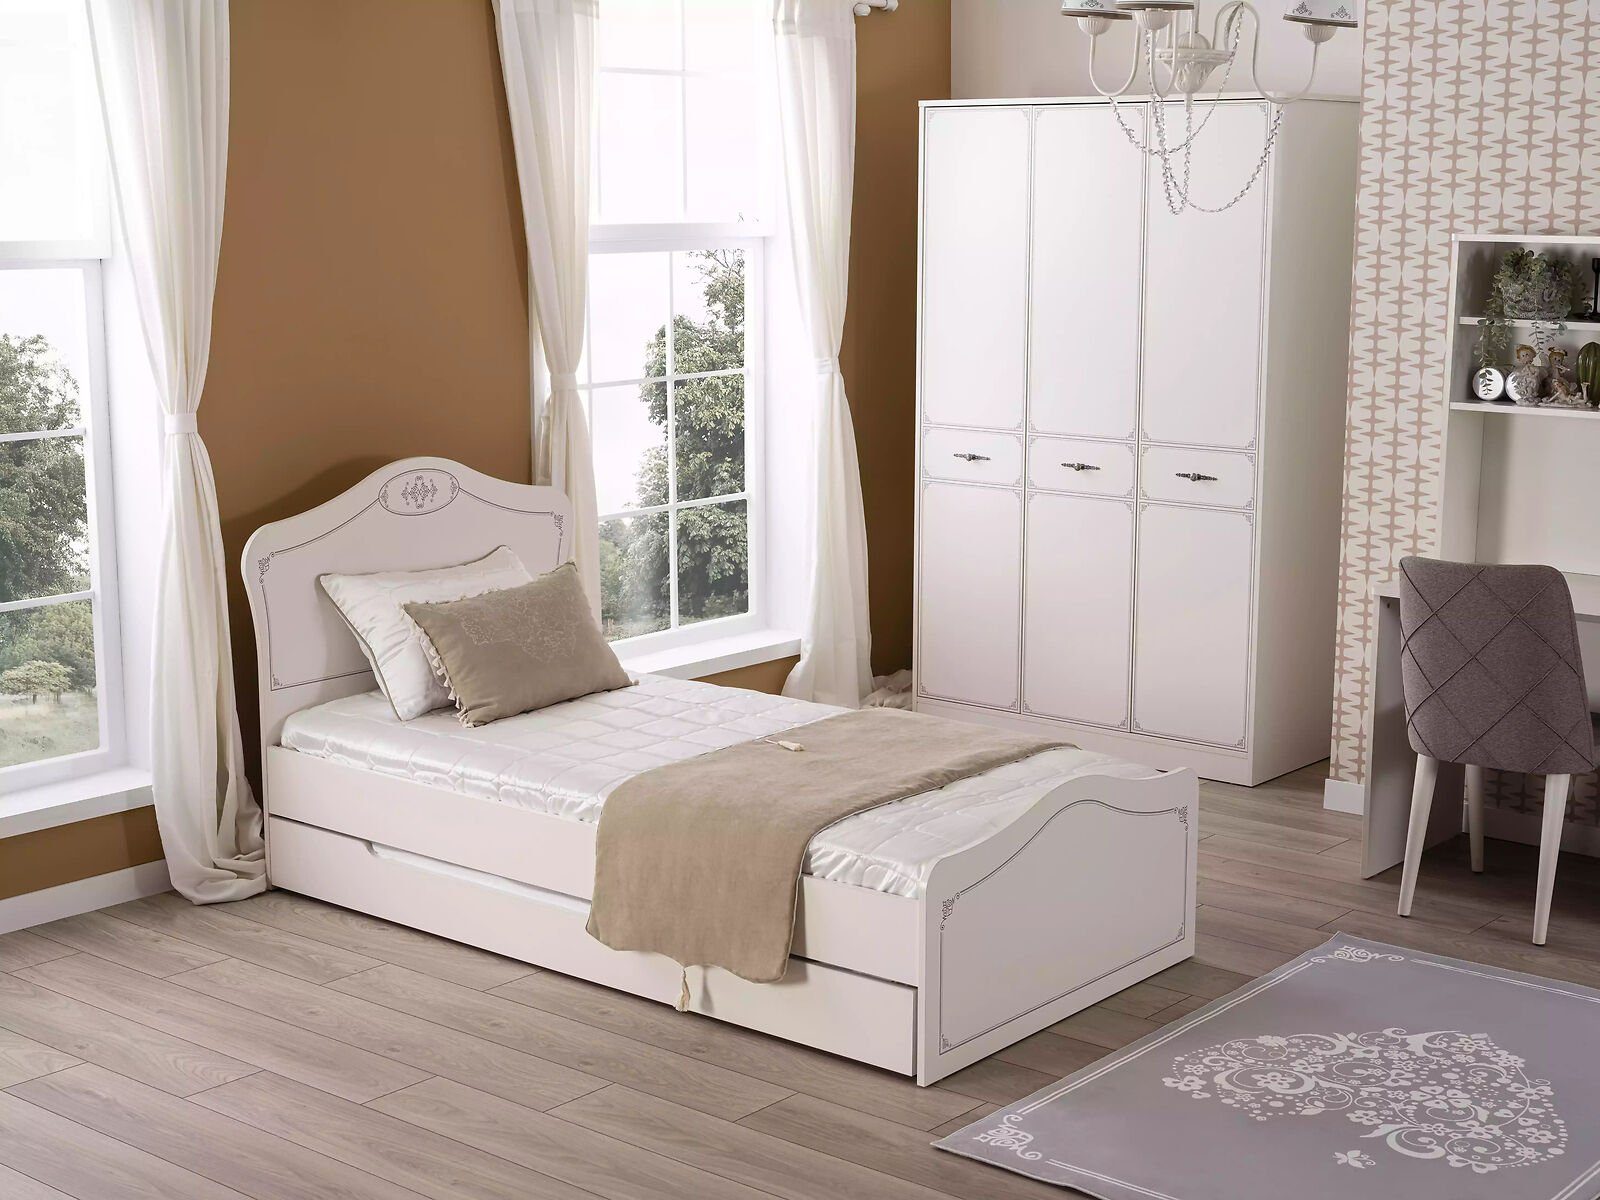 JVmoebel Bett Ausziehbares Bett Funktionsbett Kinderbett Bettrahmen Weiß Holz Betten (1-tlg., Nur Bett), Made in Europe